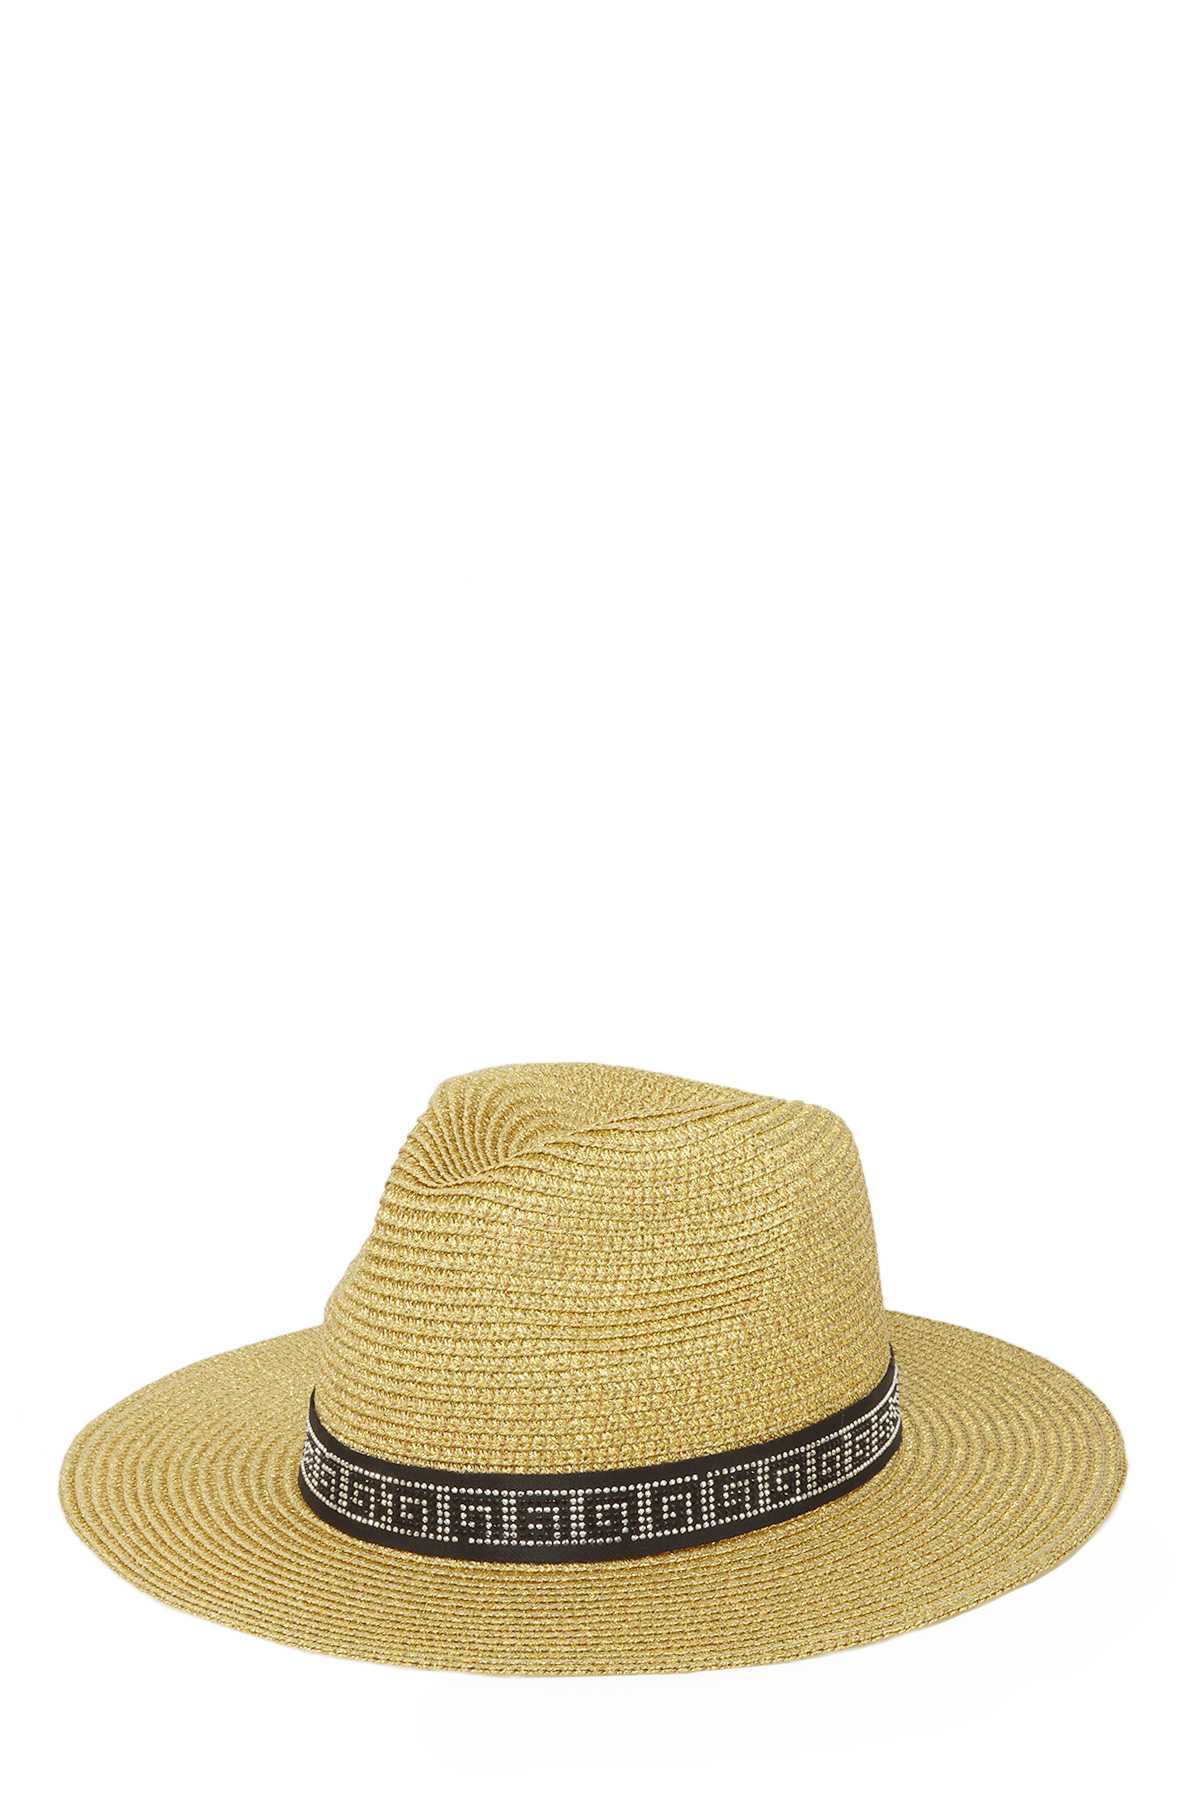 Greek Pattern Strawband Straw Hat